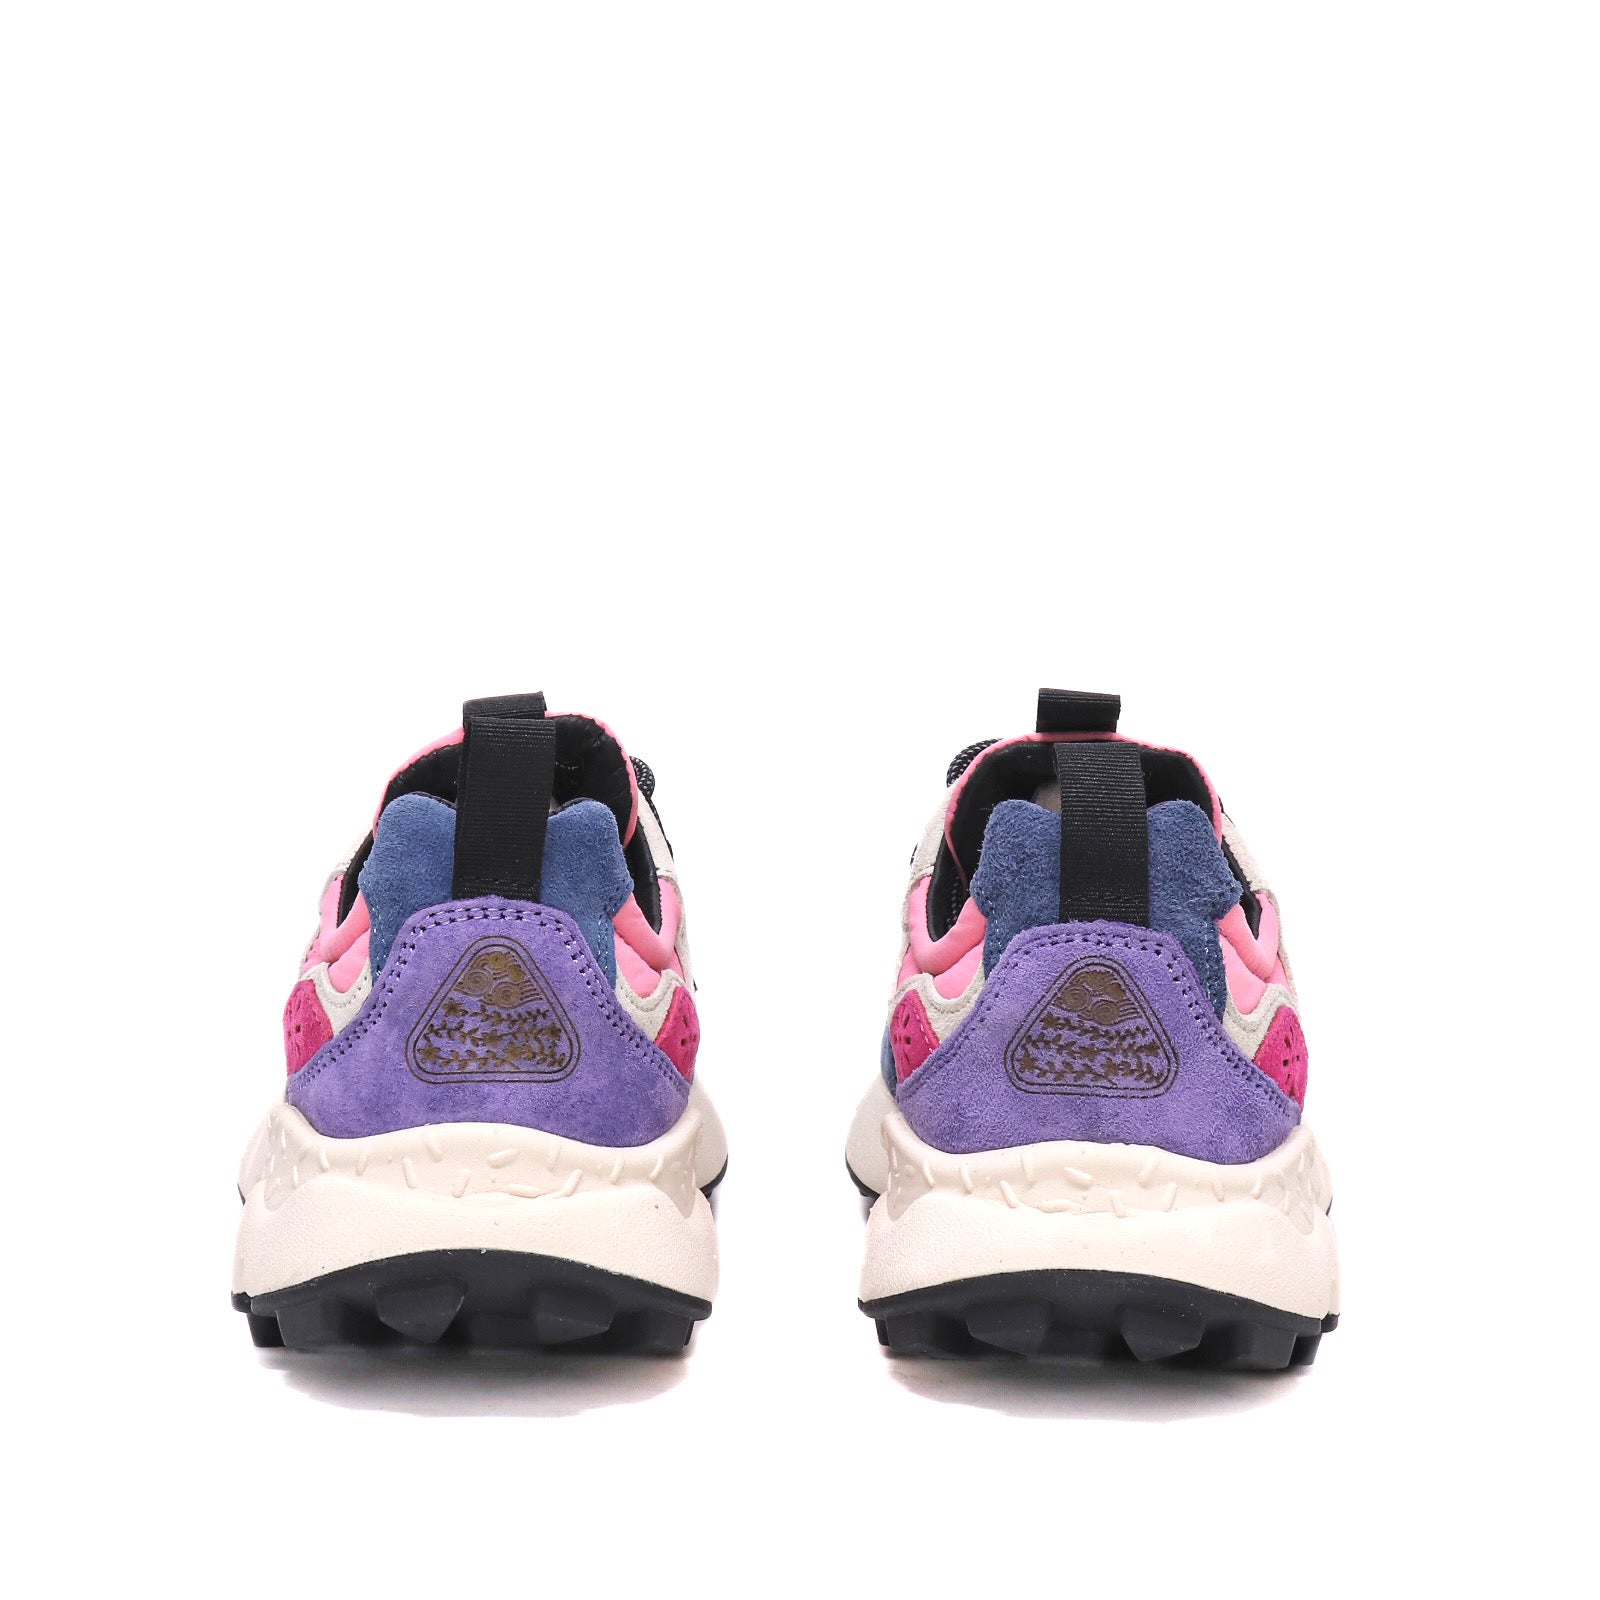 Flower Mountain Yamano sneakers